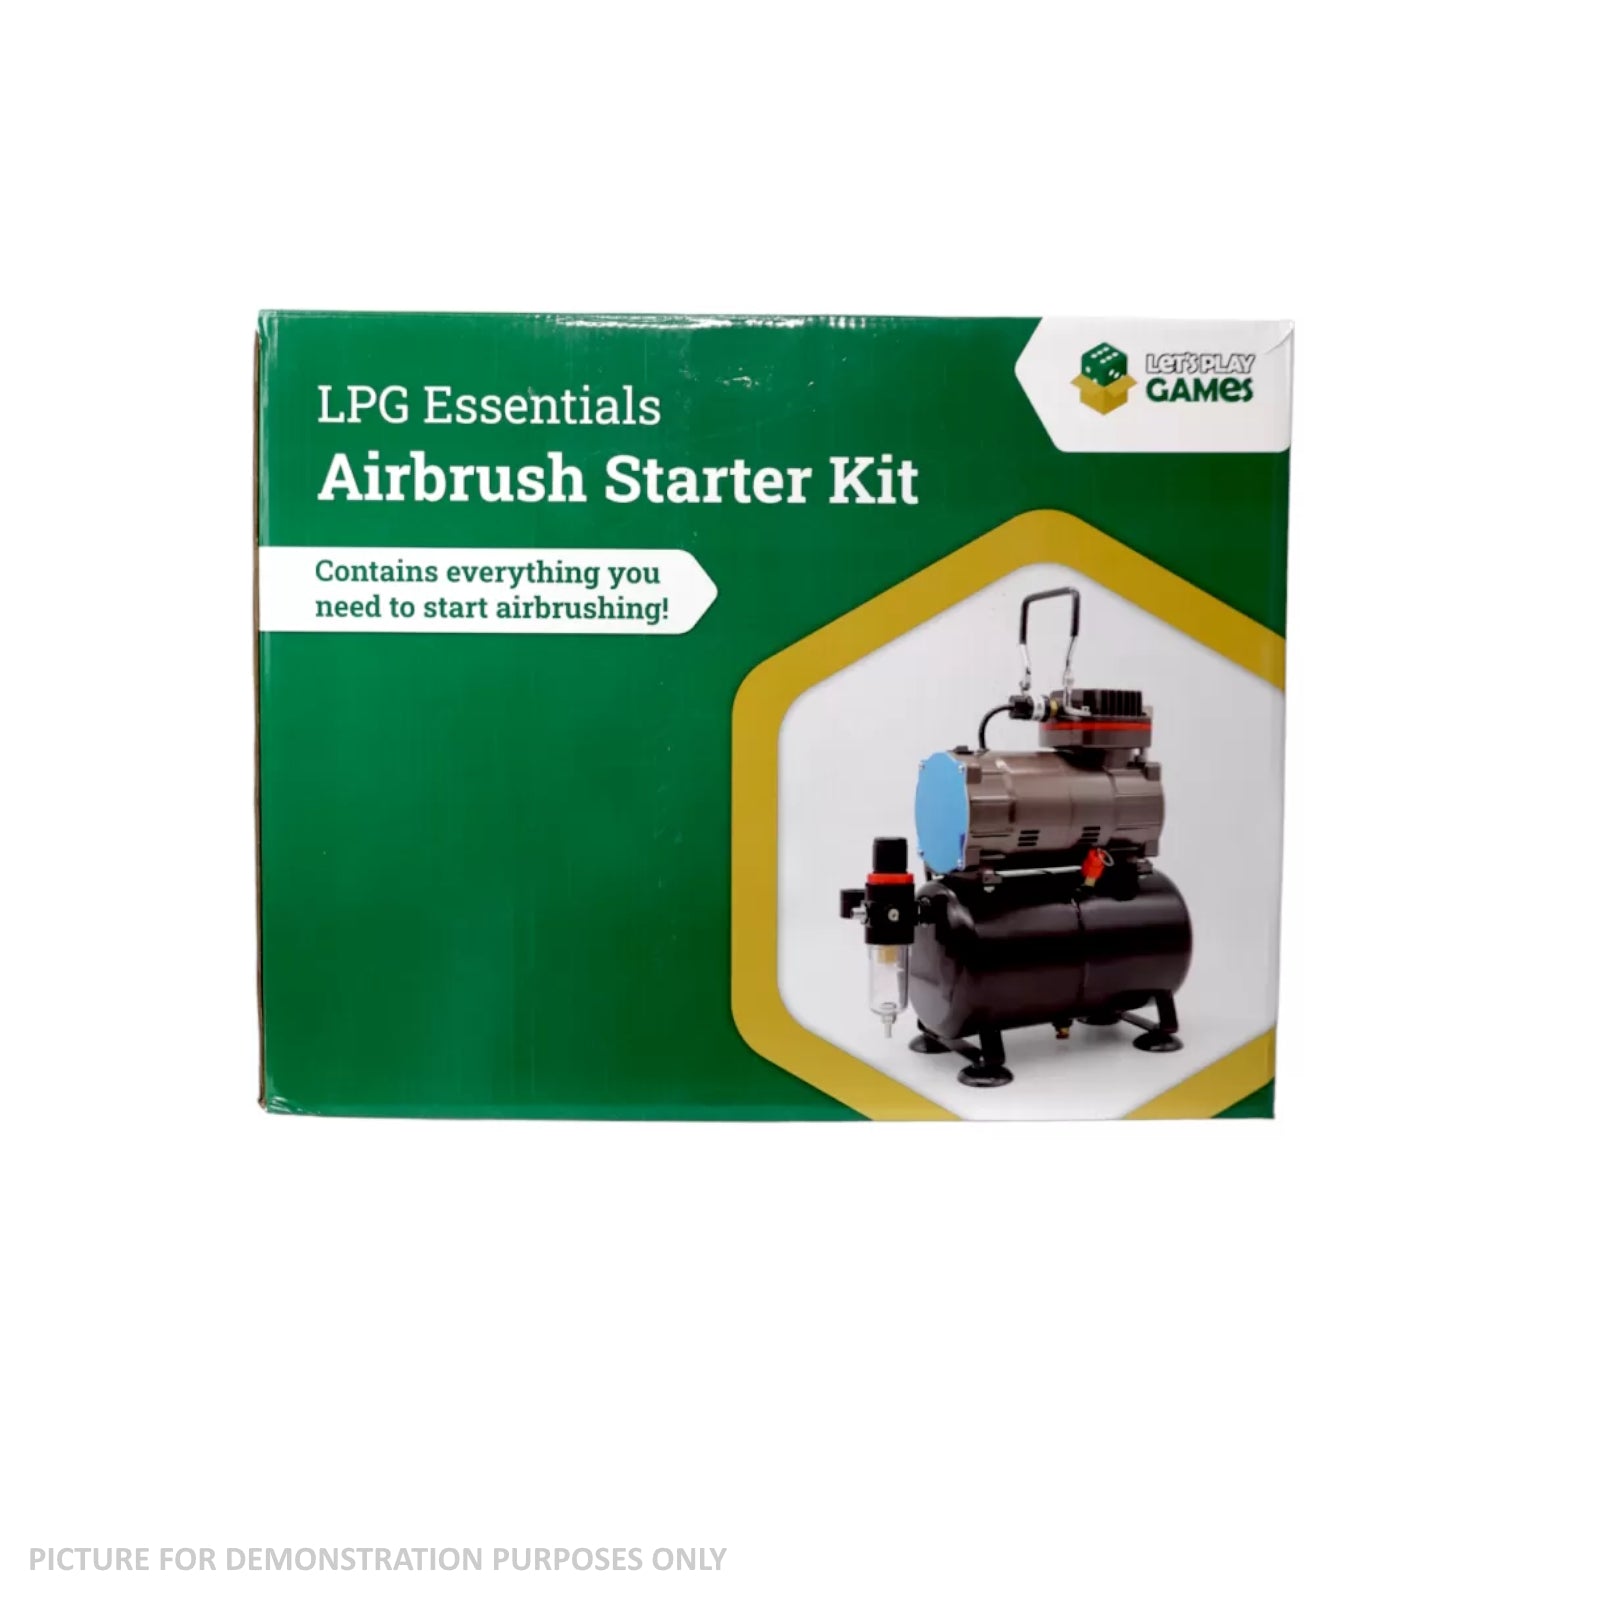 LPG Essentials Airbrush Starter Kit